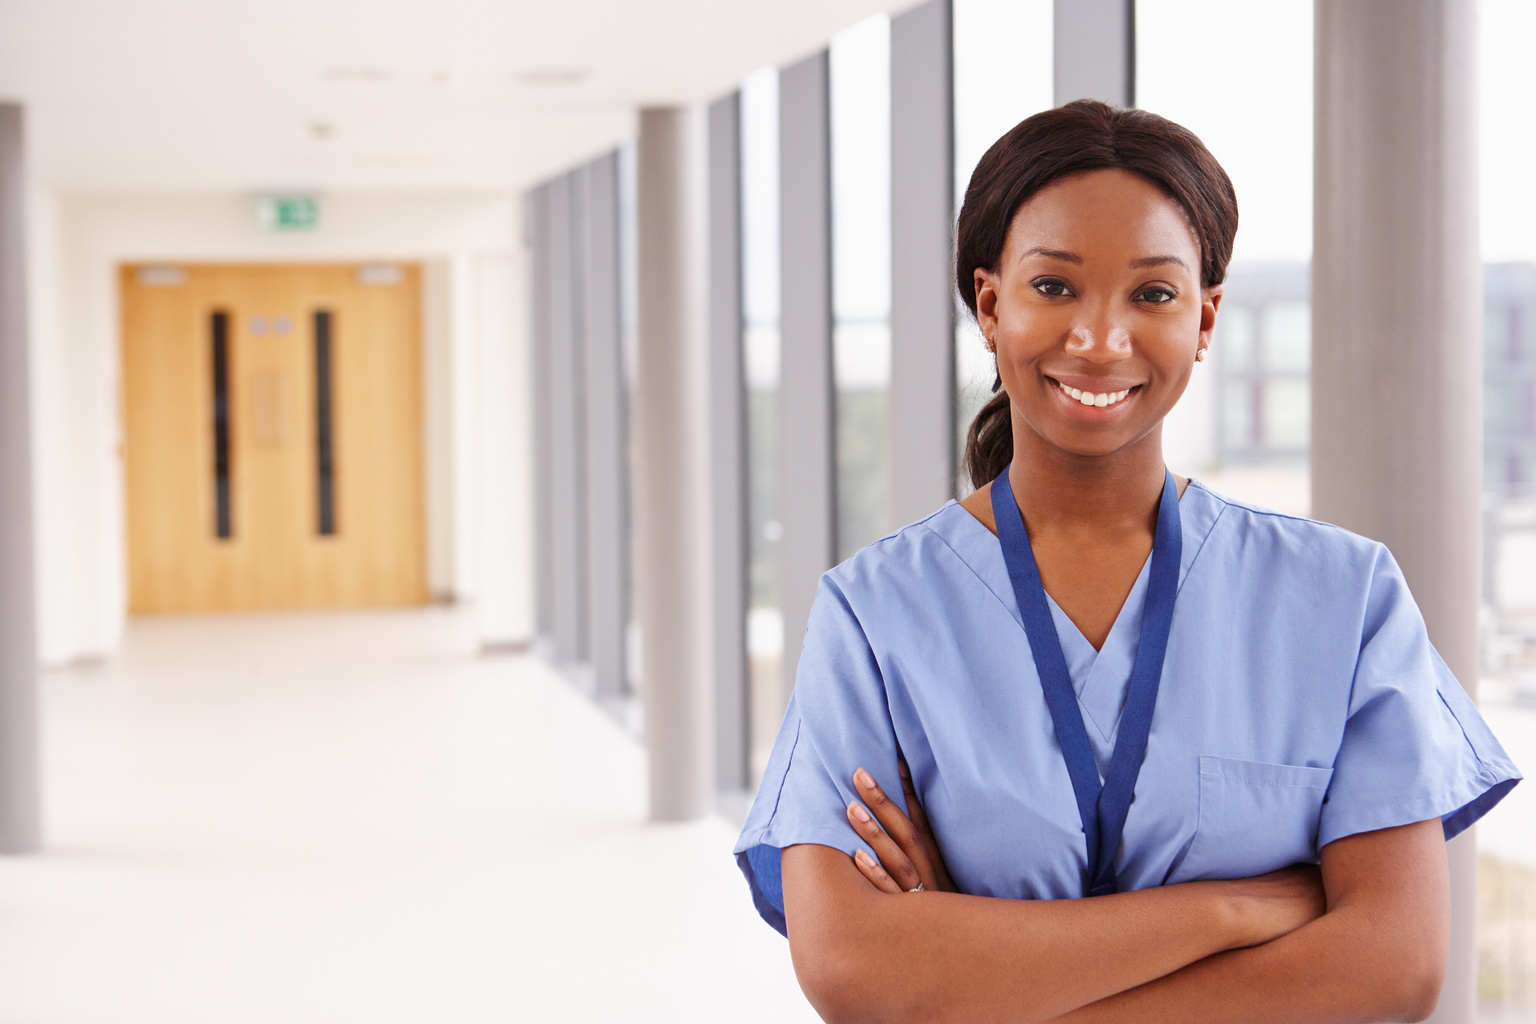 Top 10 skills nursing students need to succeed